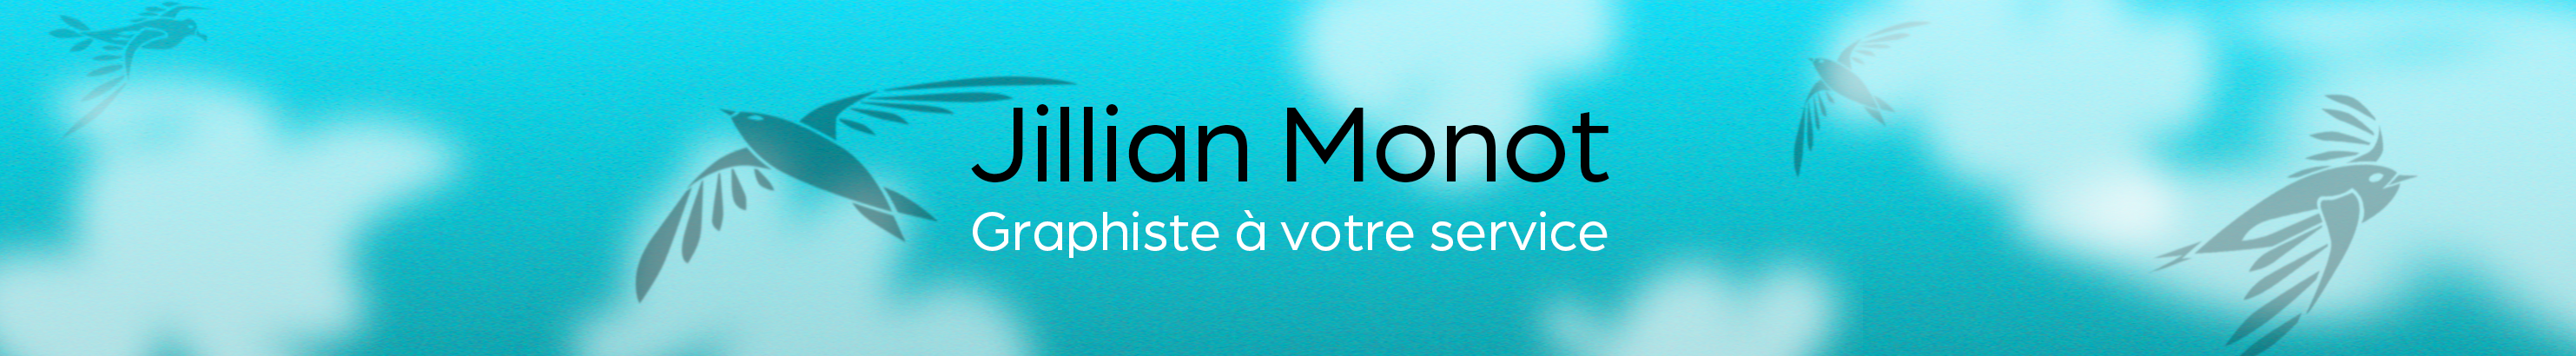 Jillian Monot's profile banner